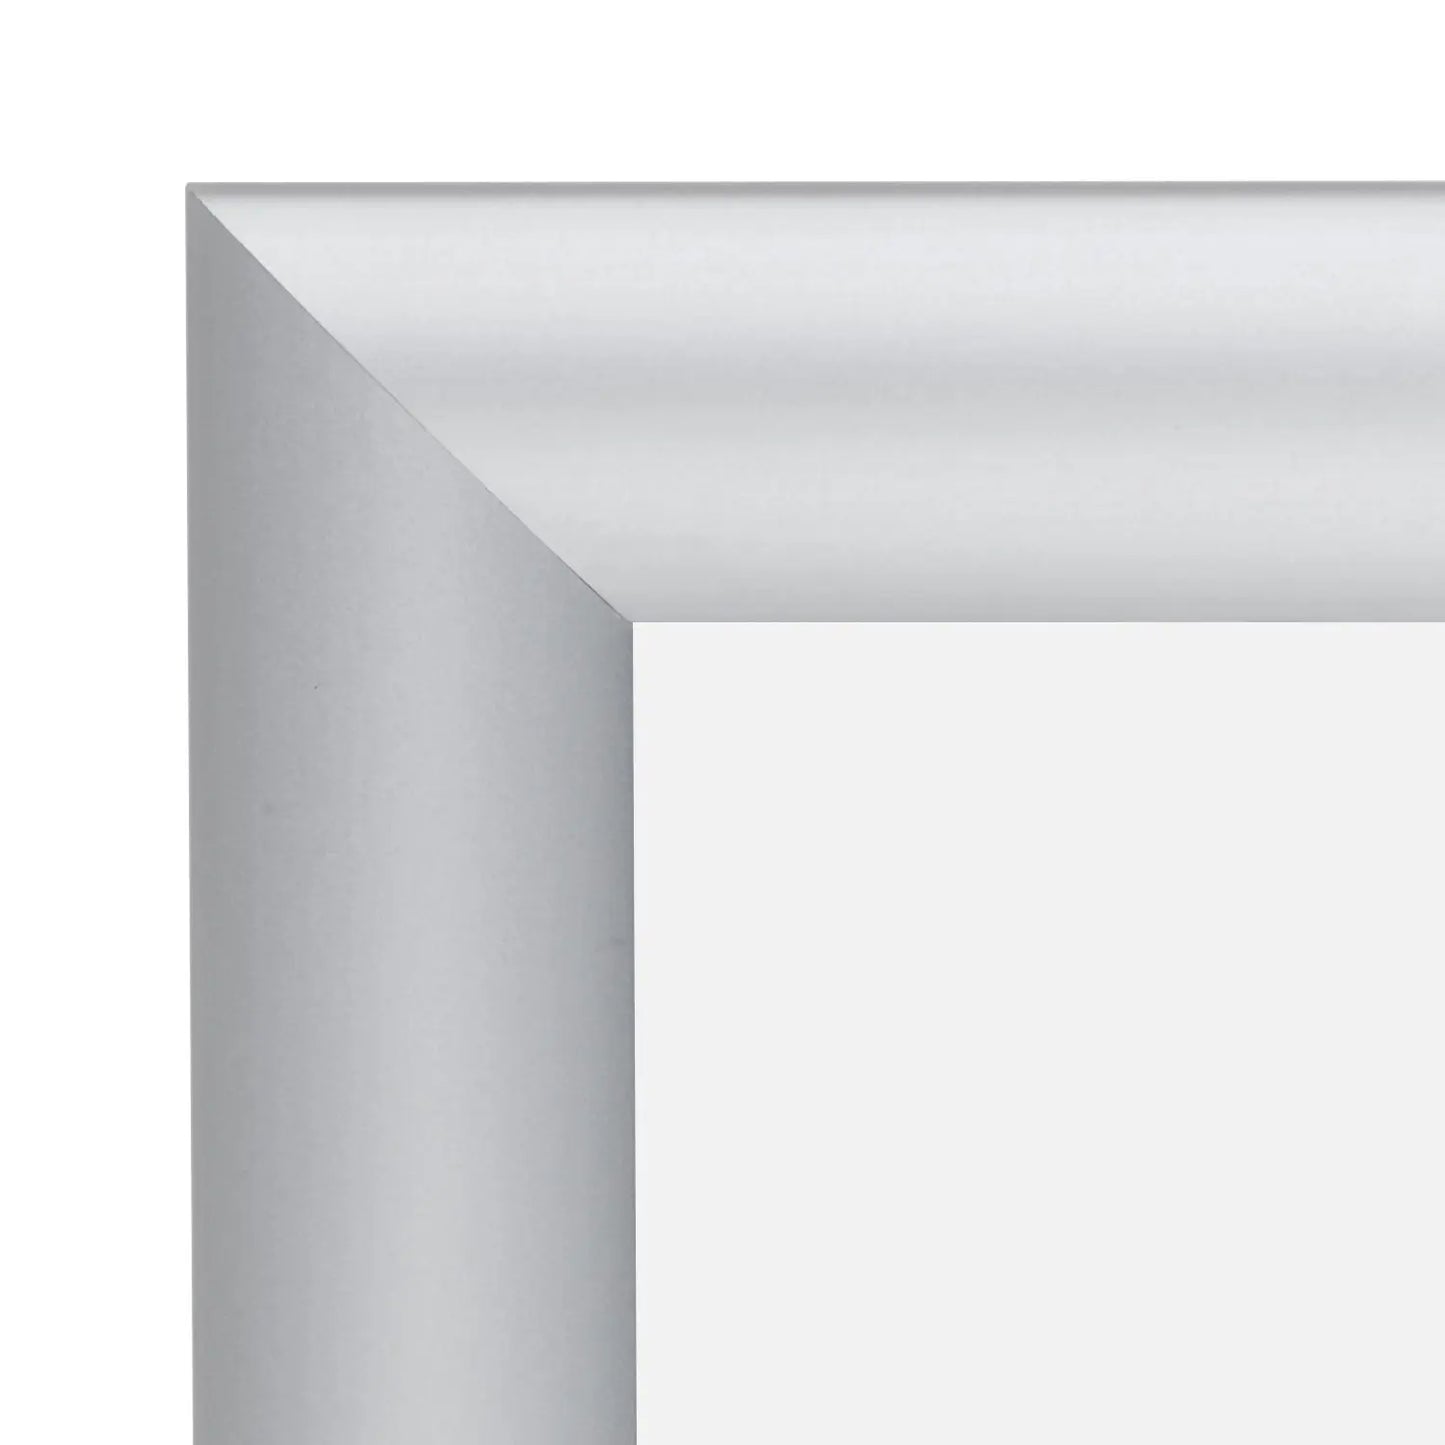 10x18 Silver SnapeZo® Snap Frame - 1" Profile - Snap Frames Direct